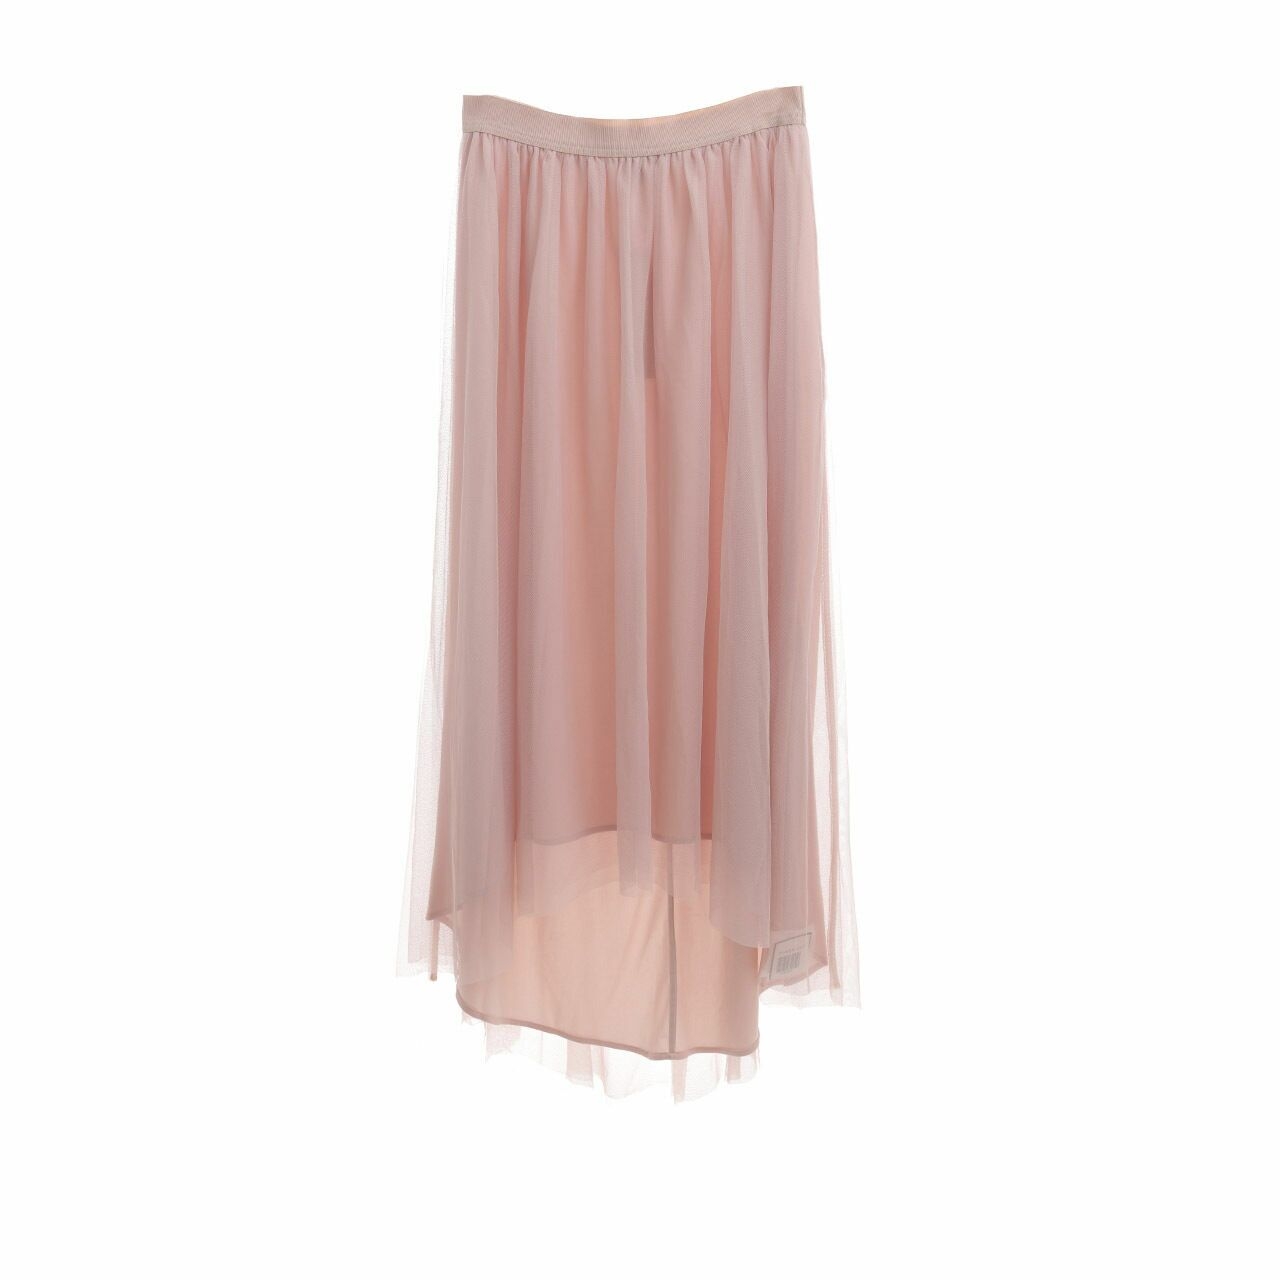 Lauren Conrad Dusty Pink Maxi Skirt